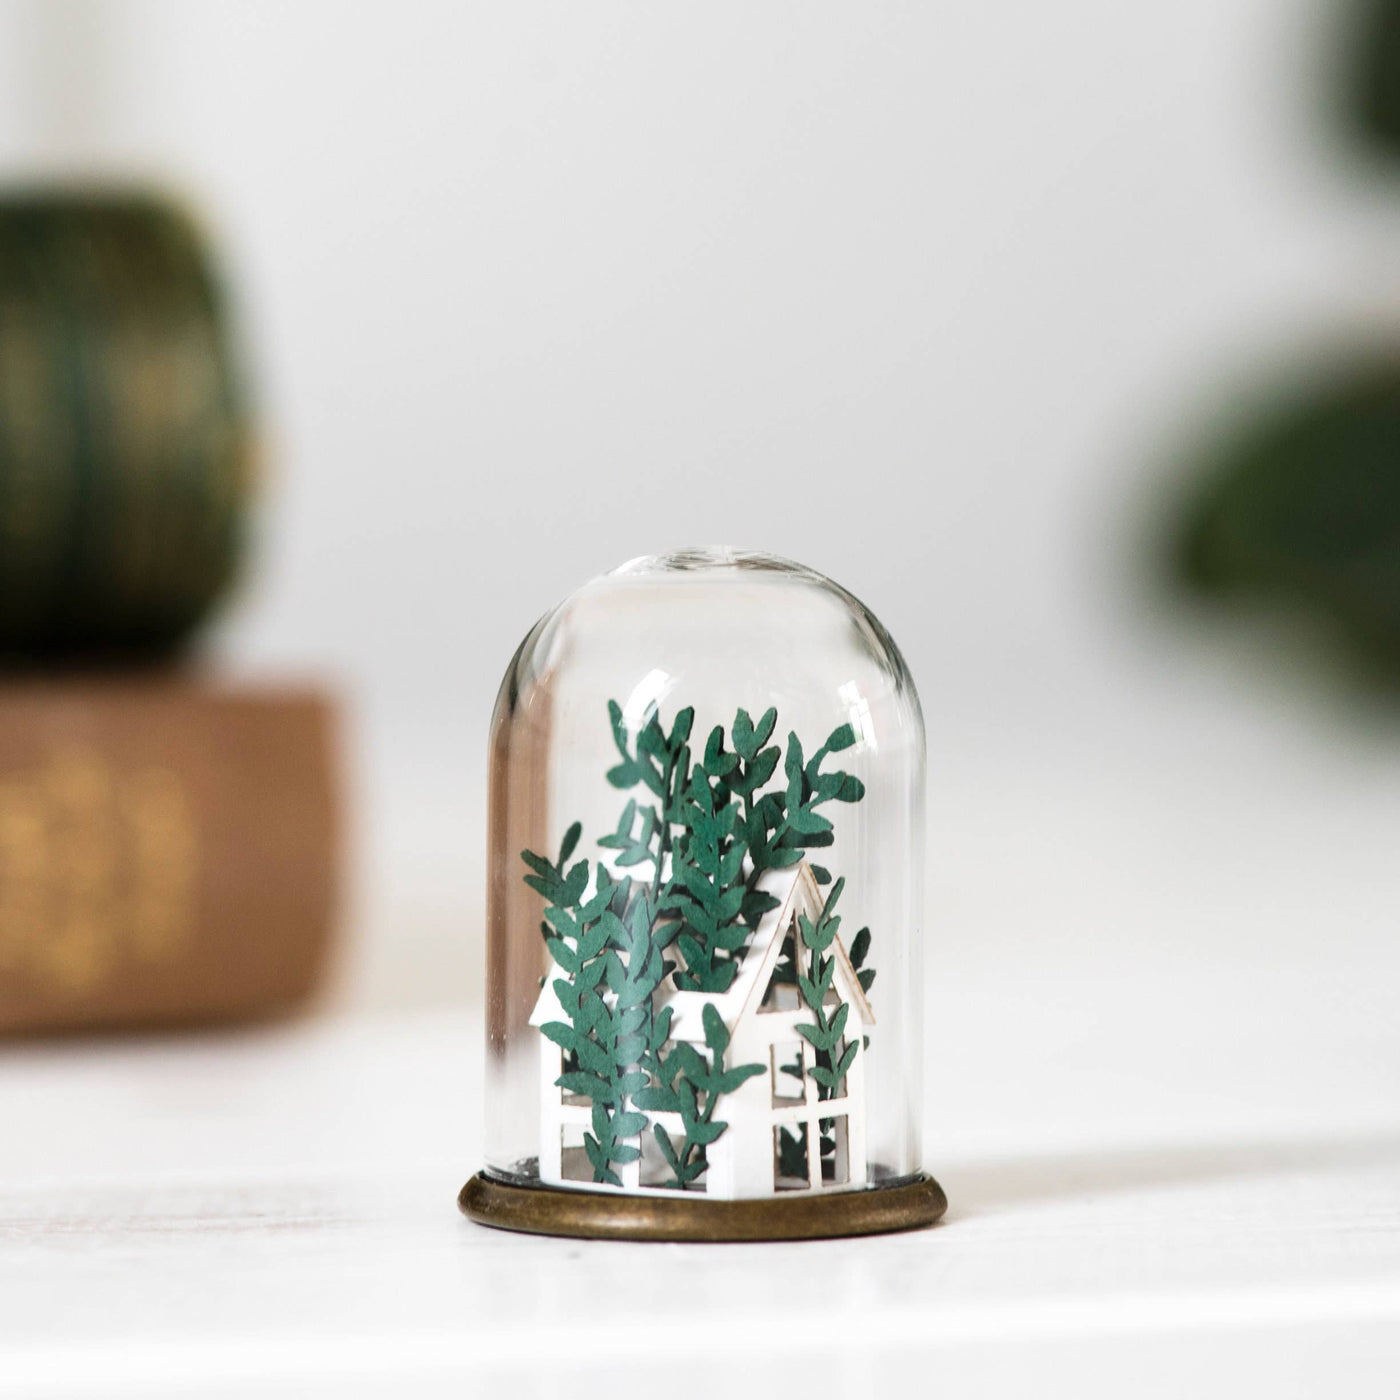 Paper green house miniature ornament